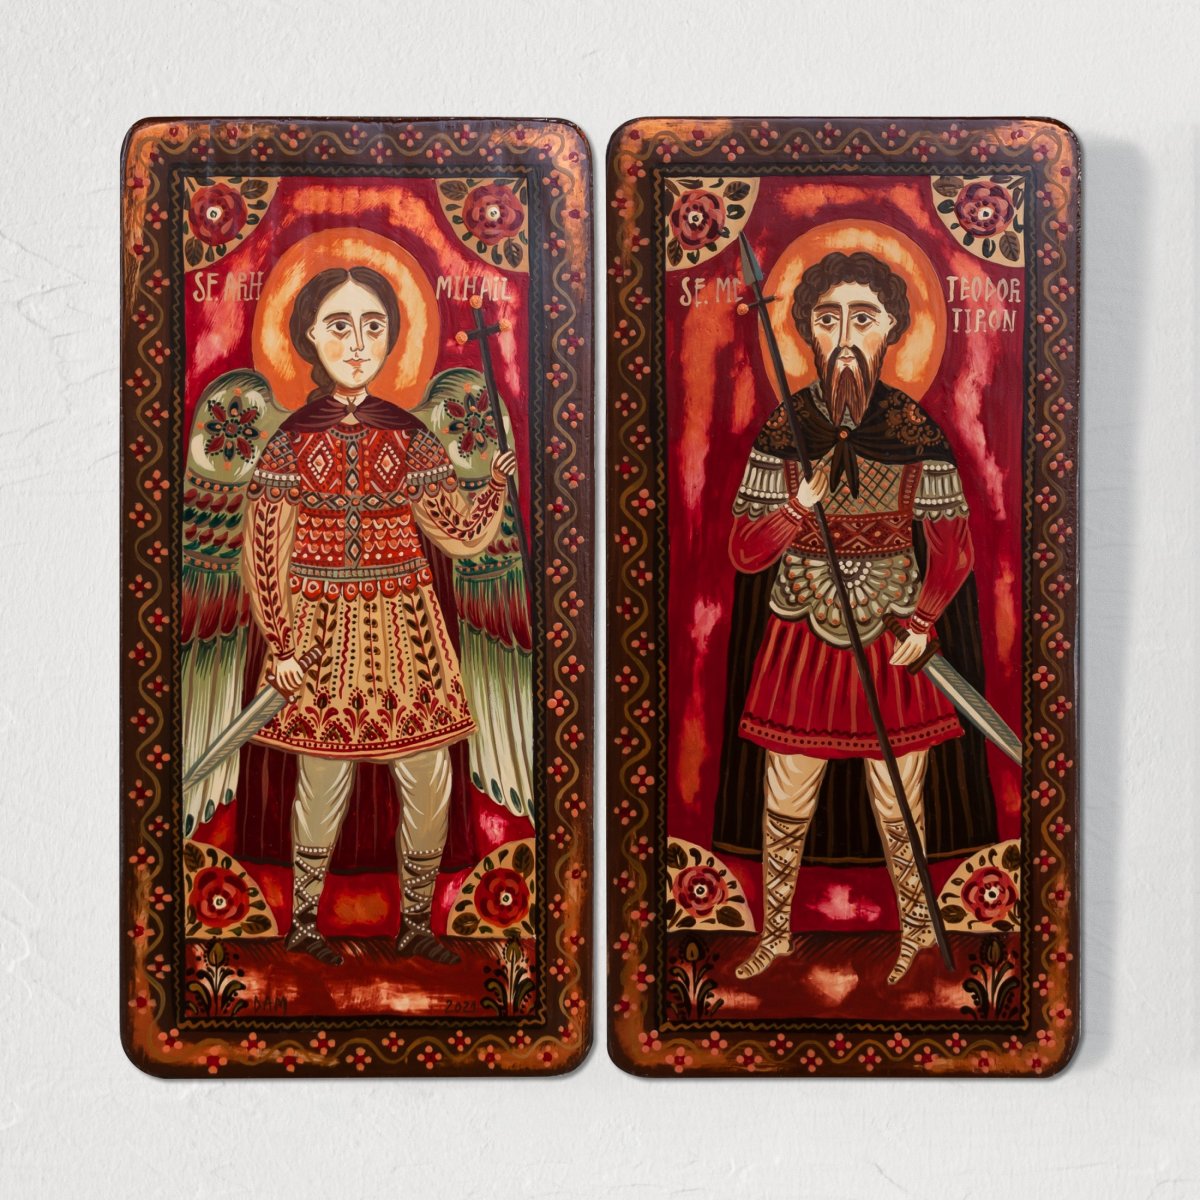 Icoană pe lemn tip diptic "Sf. Arh. Mihail și Sf. Mc Teodor Tiron", 2 x 10x20cm